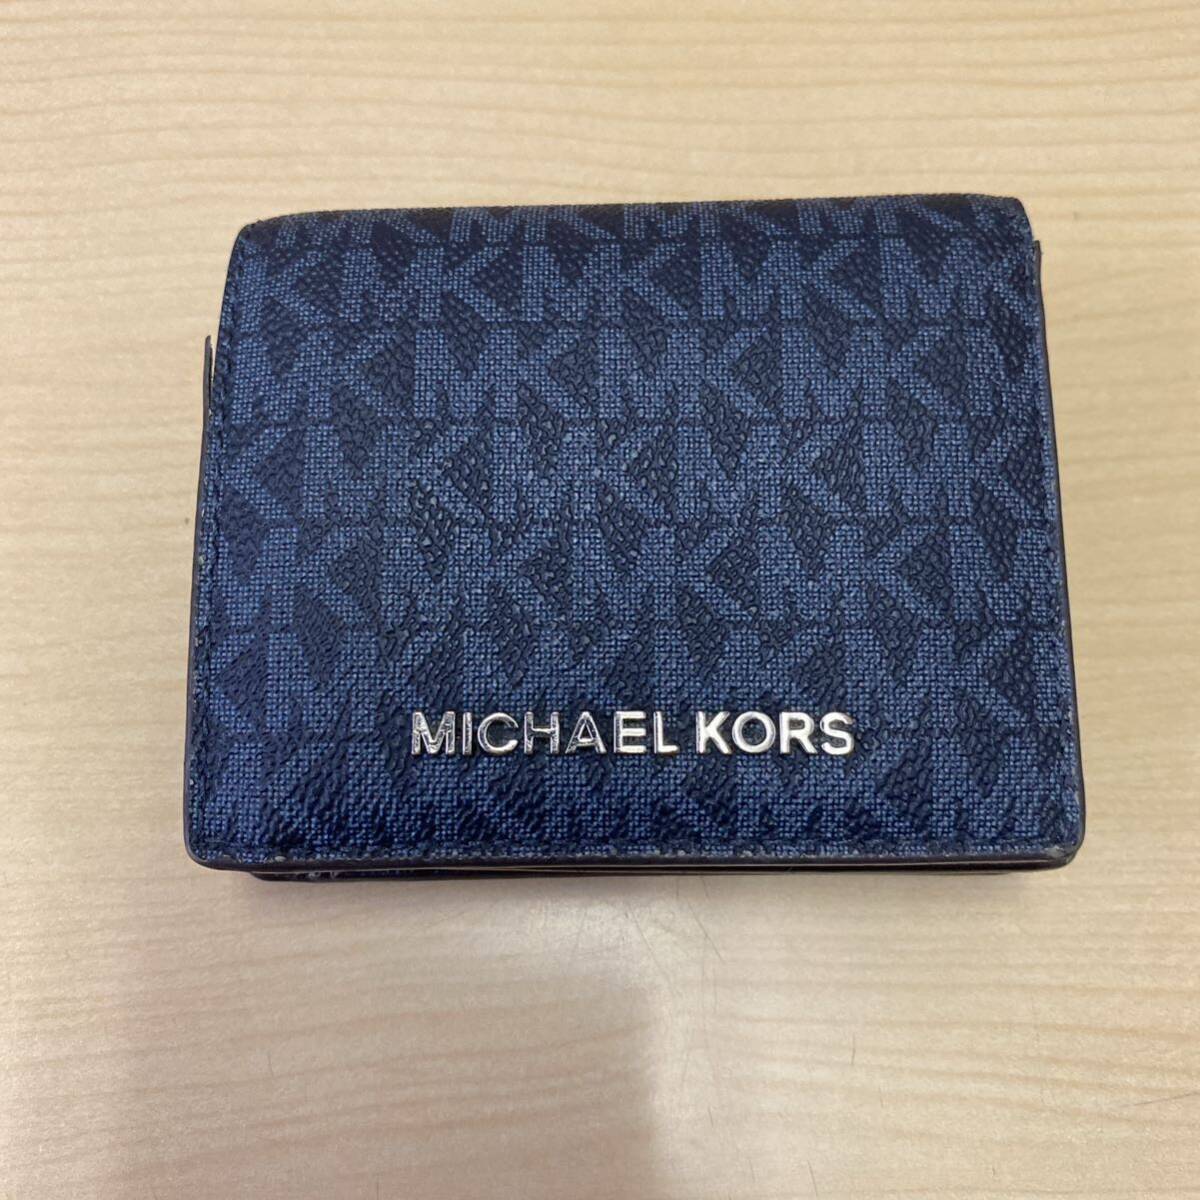 【TK0405】MICHEAL KORS マイケルコース 2つ折り財布 ネイビー 紺色 キズあり 汚れあり 小銭入れ カード入れ 使用感ありの画像1